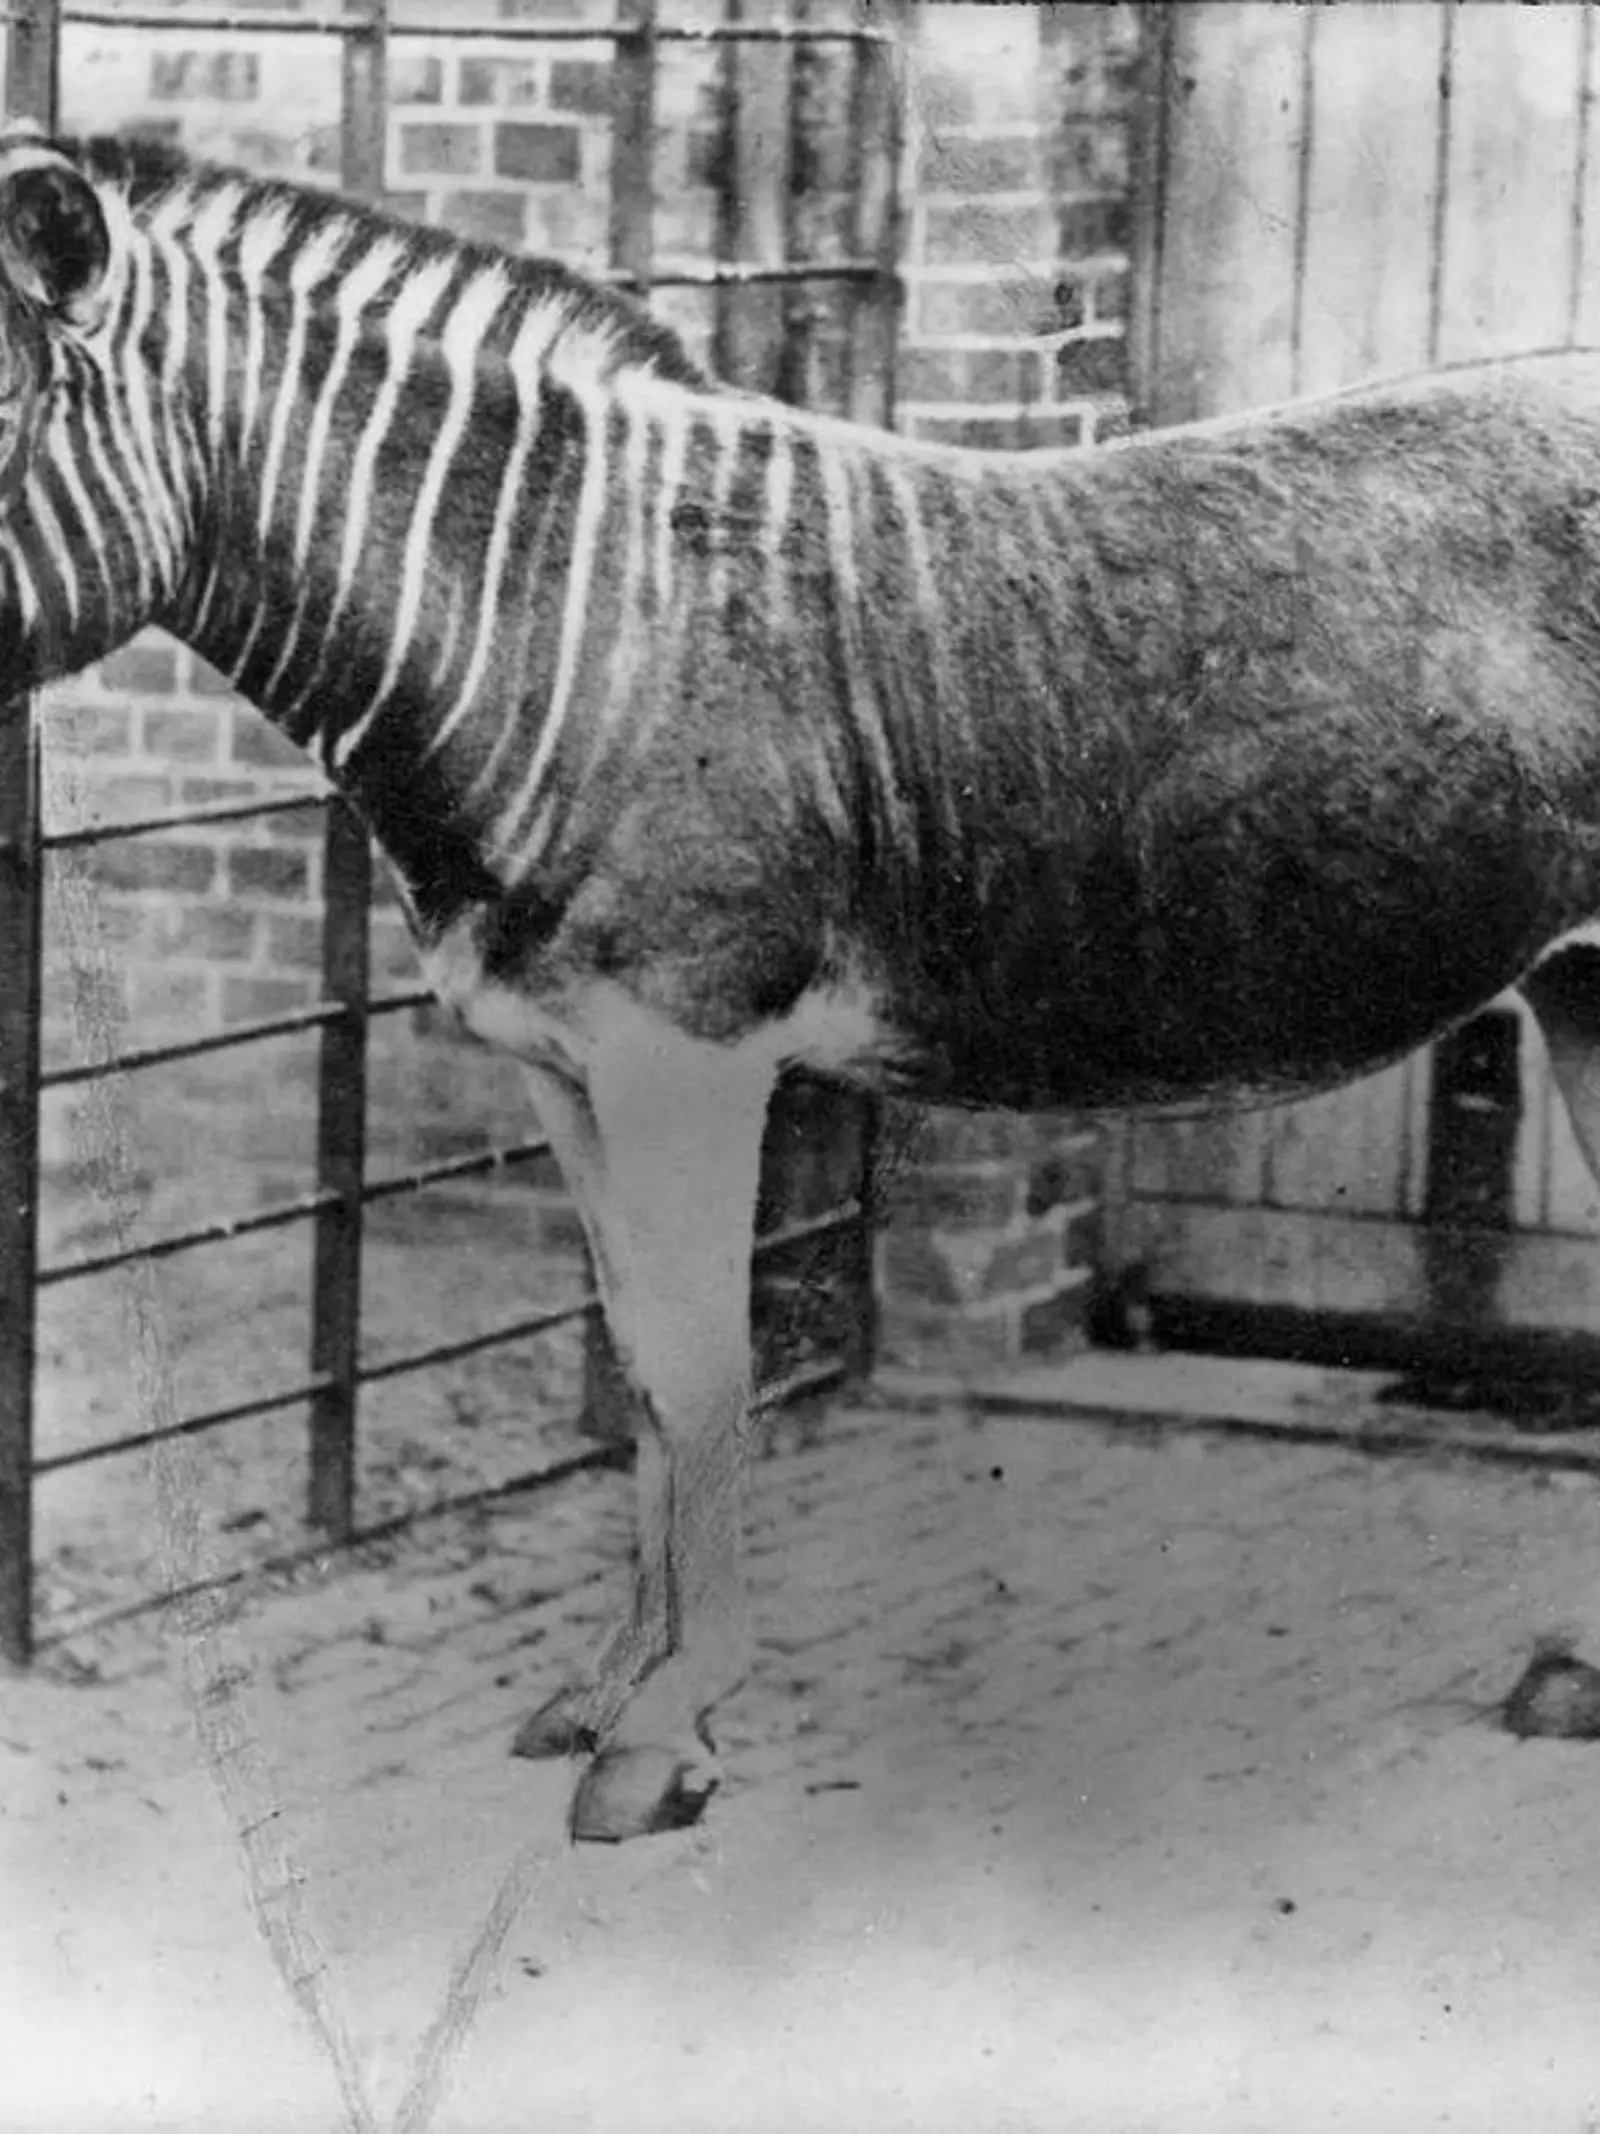 Quagga at London Zoo in 1870